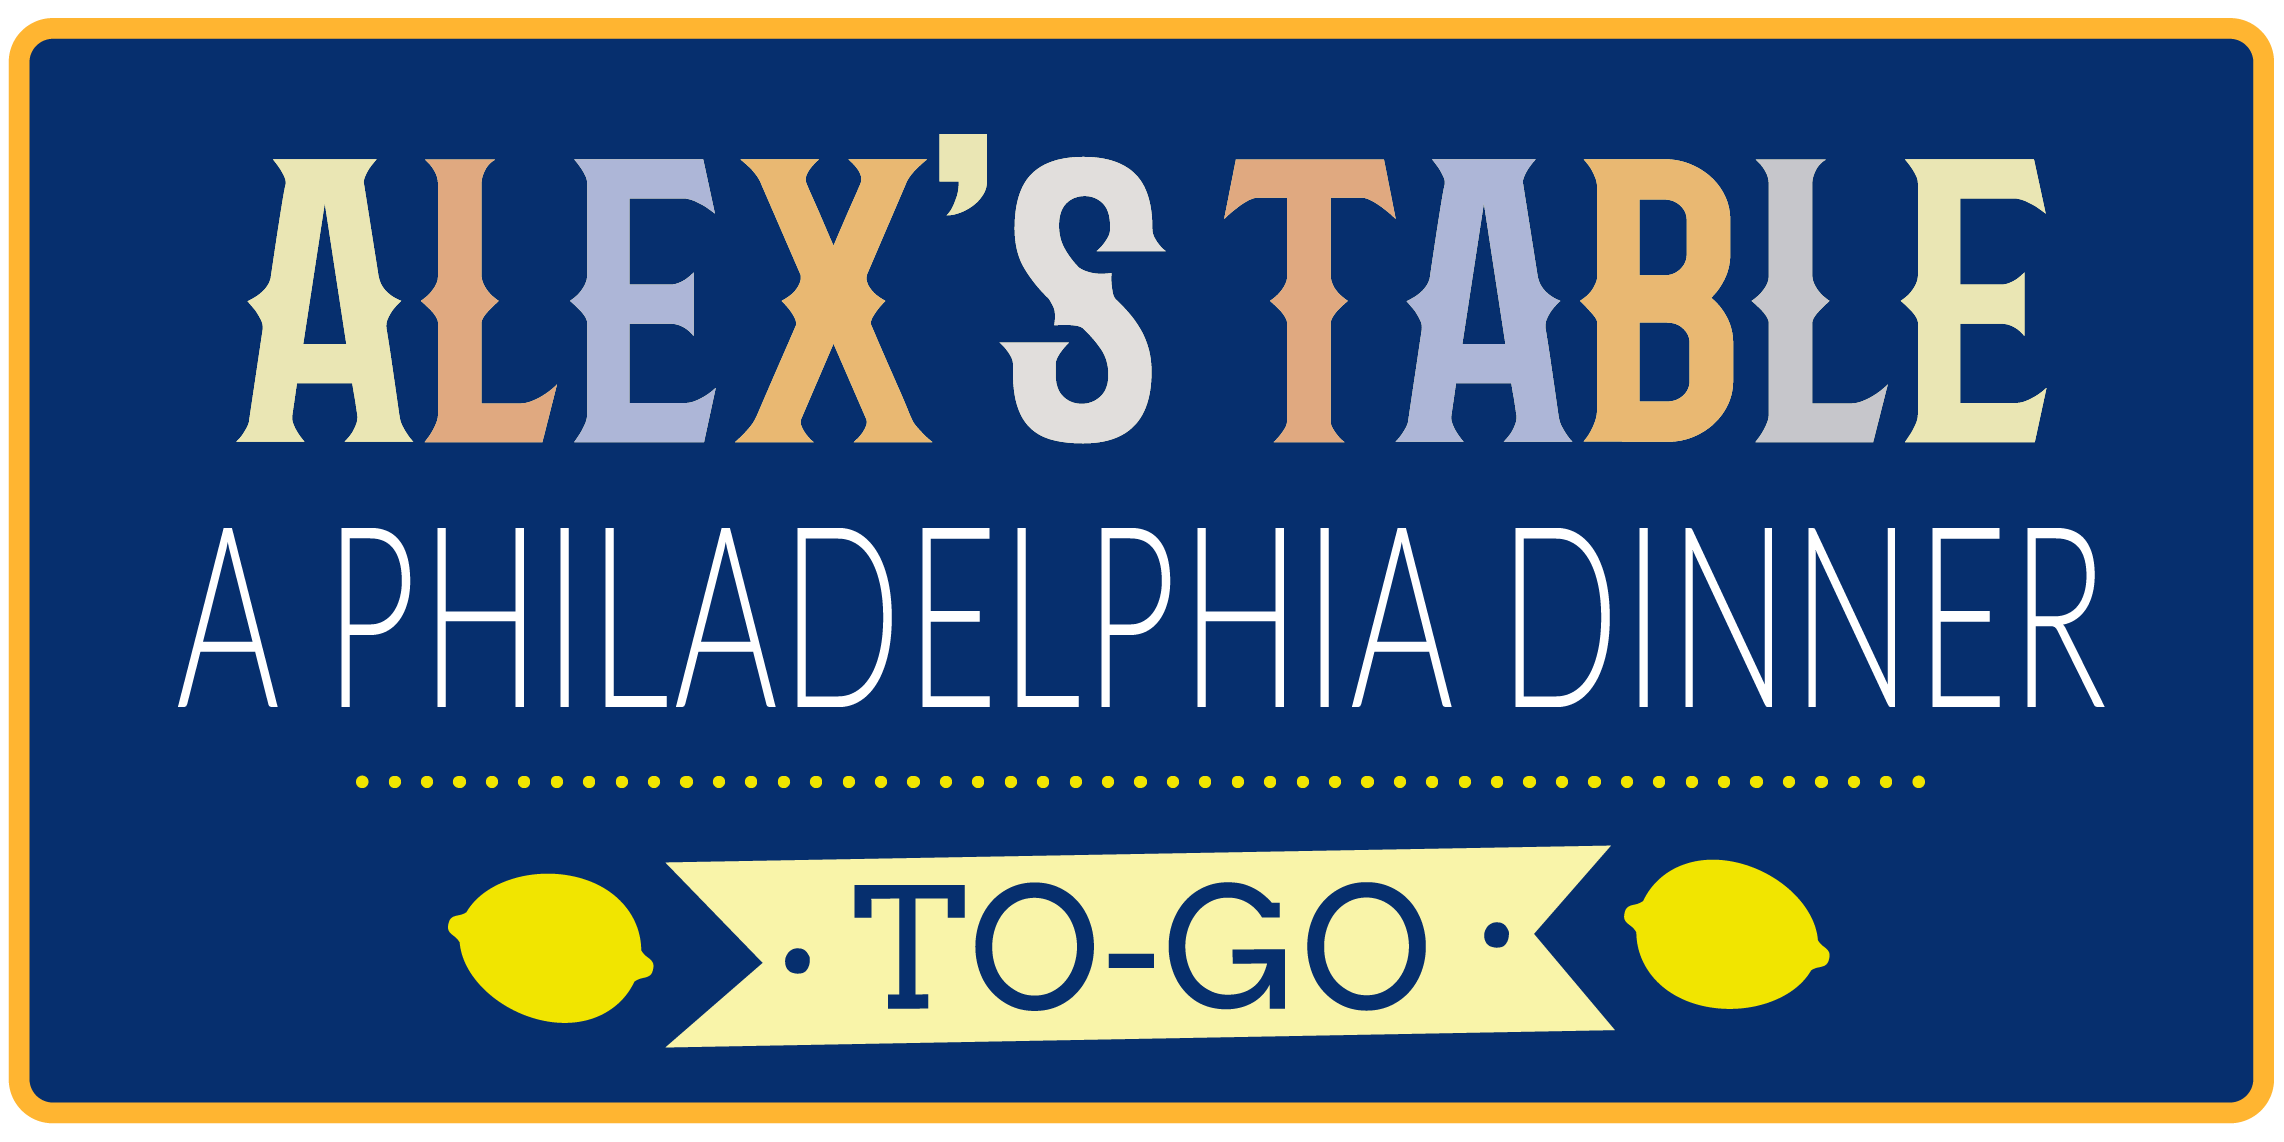 Alex’s Table: A Philadelphia Dinner “To-Go”